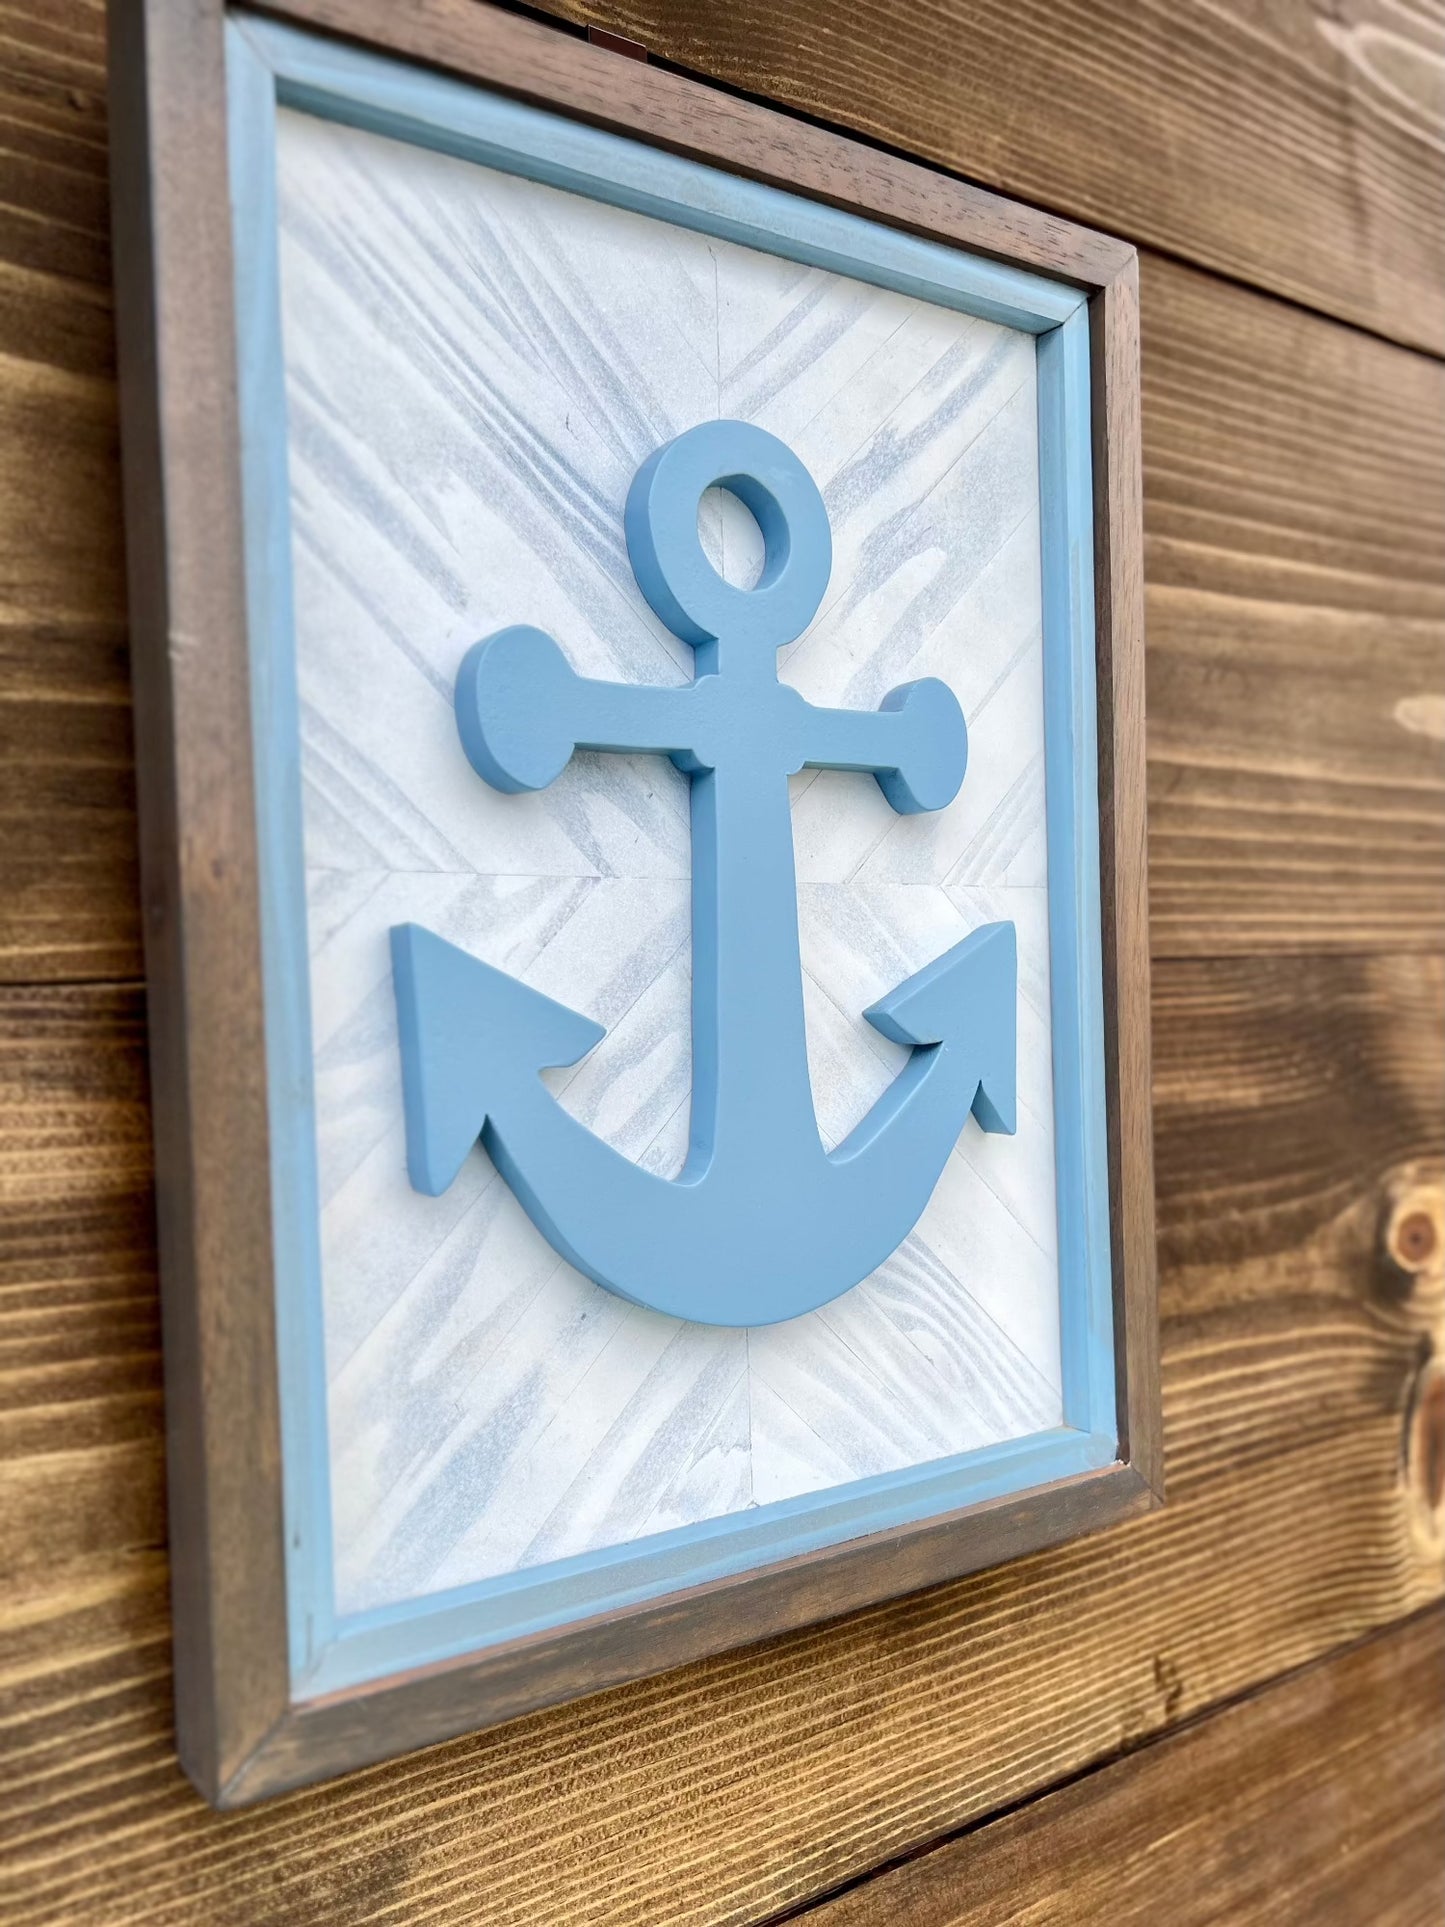  Anchor 3D framed wood sign for your Beach House